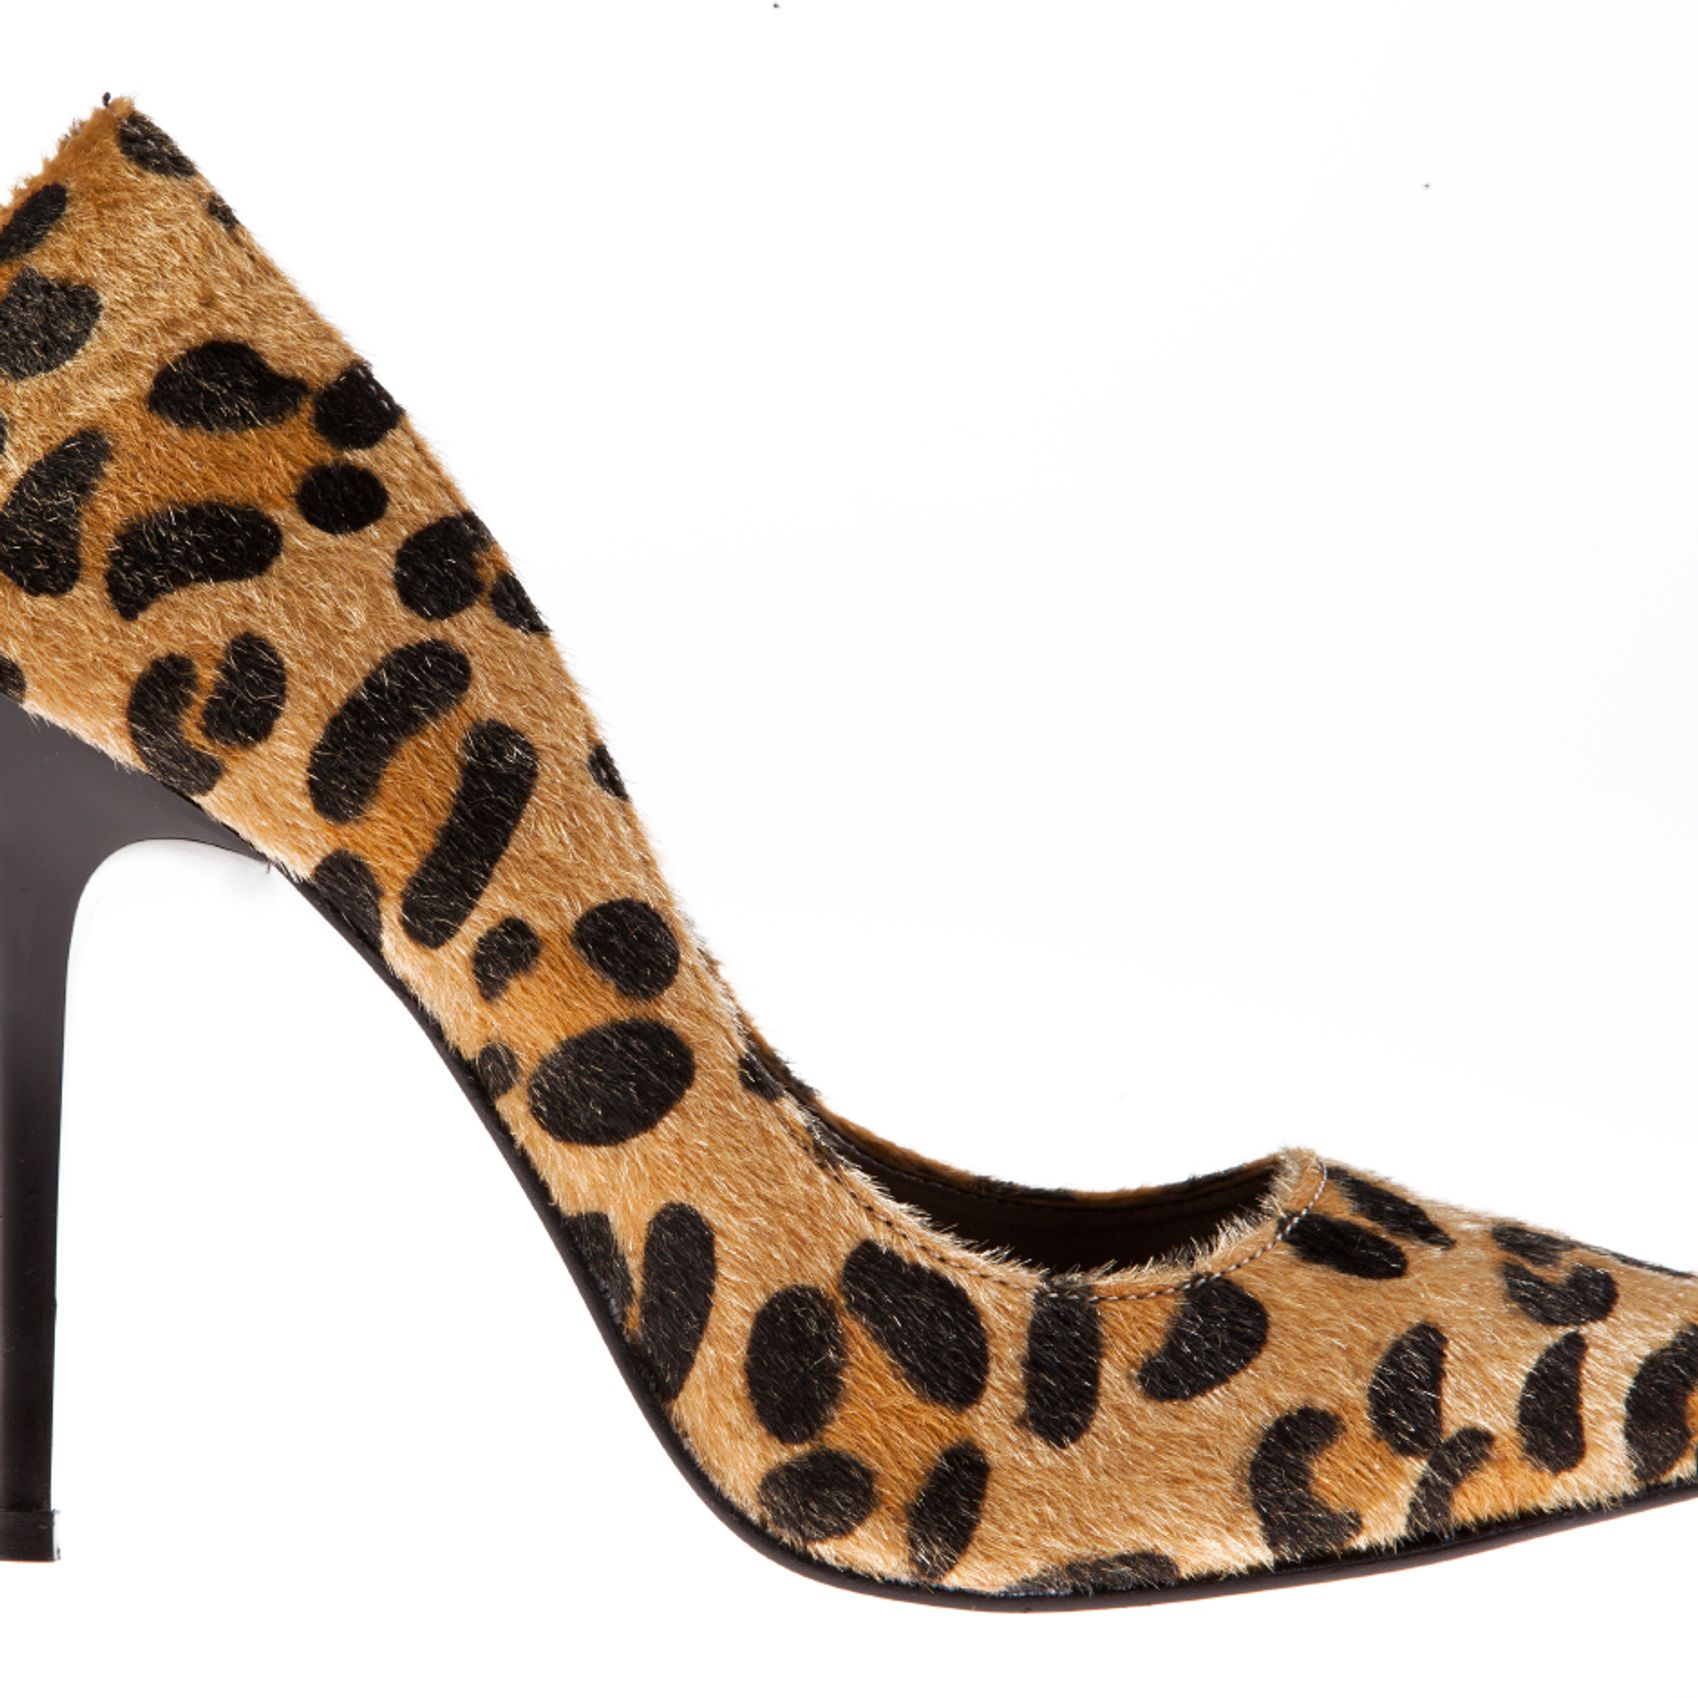 K Shoes Stiletto brun motif animal style extravagant Chaussures Escarpins Stiletto 